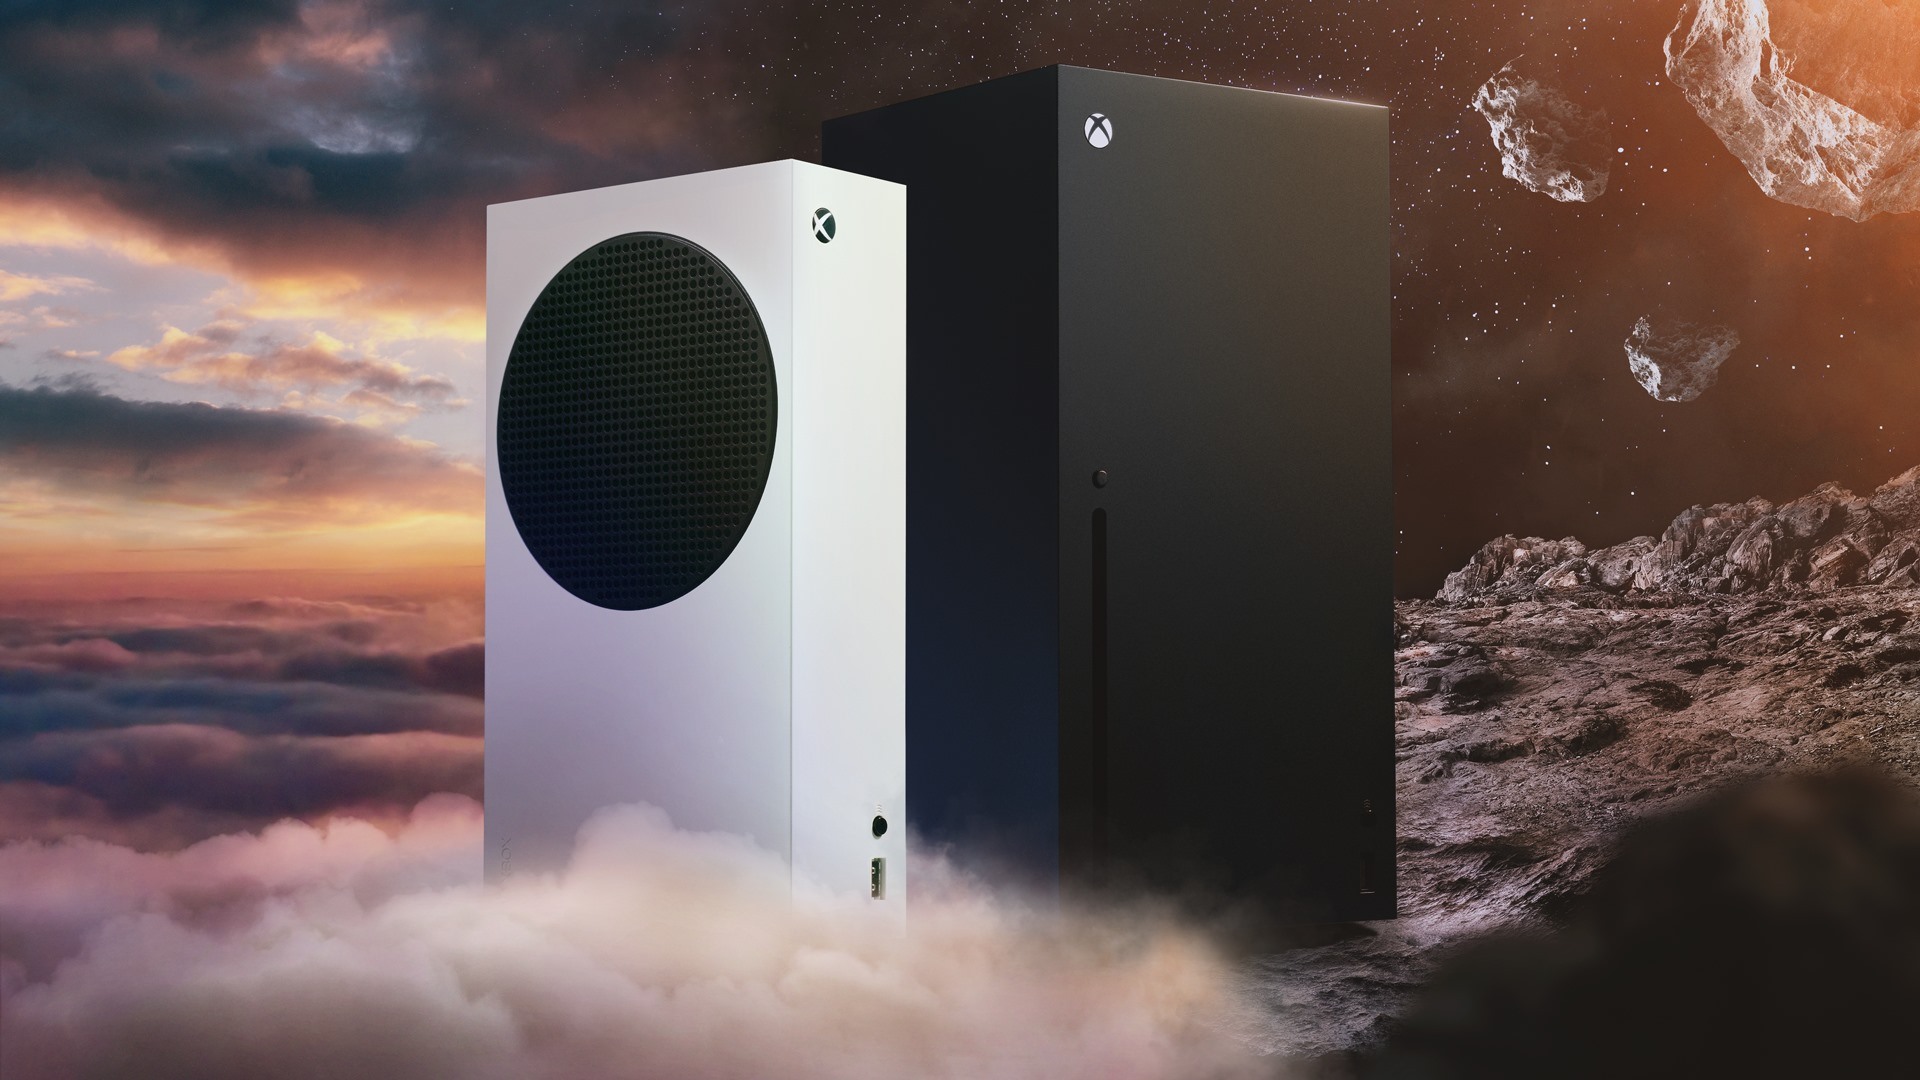 Power Your Dreams: Η νέα γενιά του Xbox gaming είναι εδώ